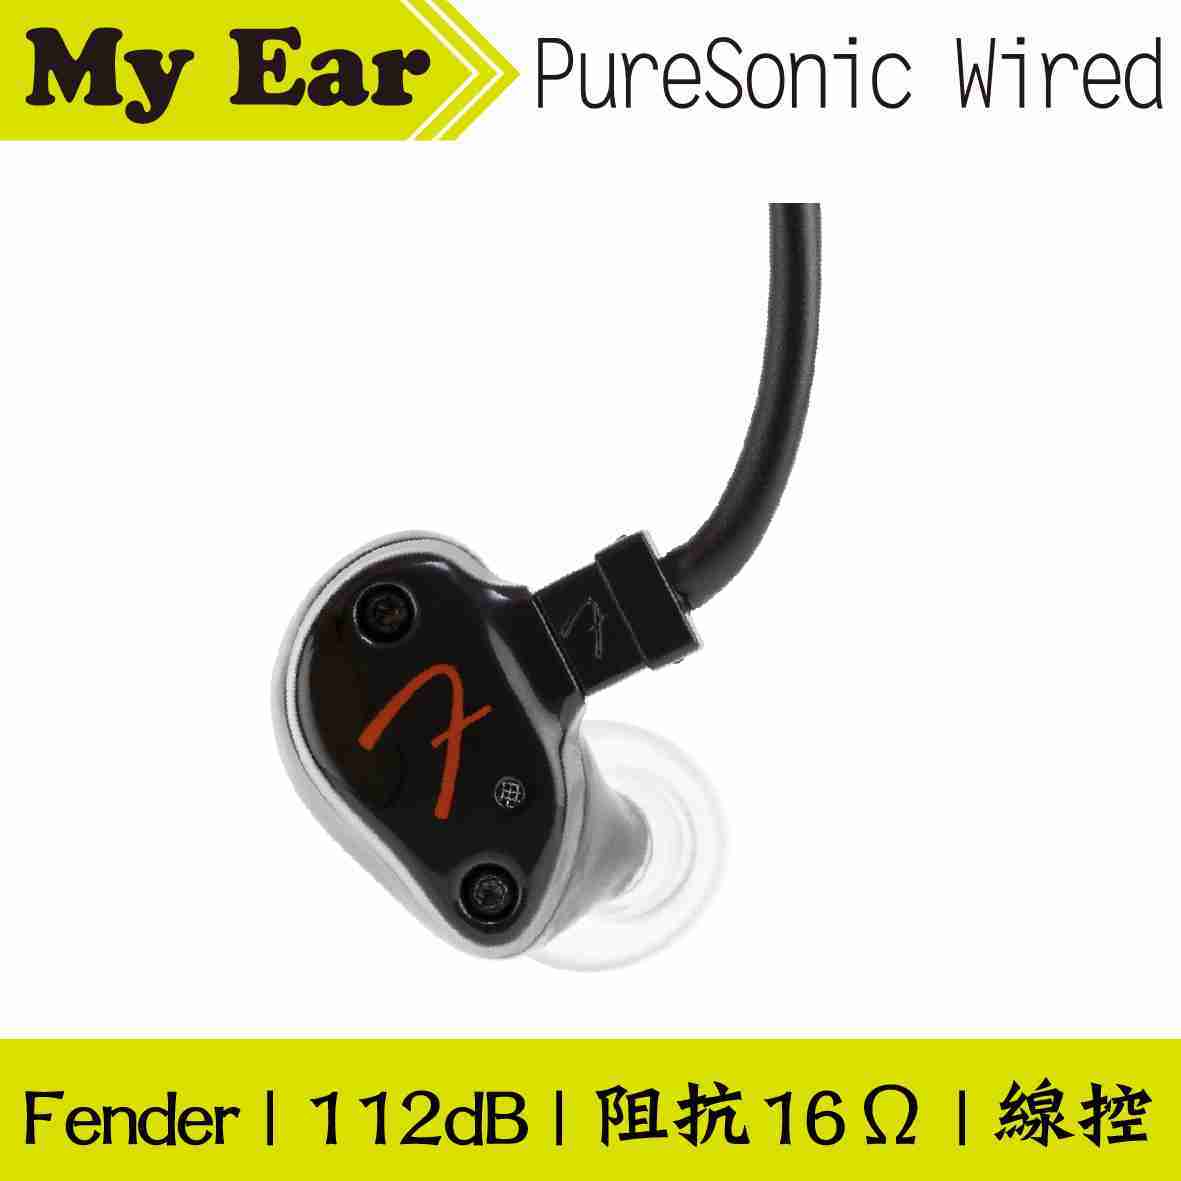 Fender PureSonic Wired 黑色 適用 iOS Android 耳道式耳機 | My Ear耳機專門店